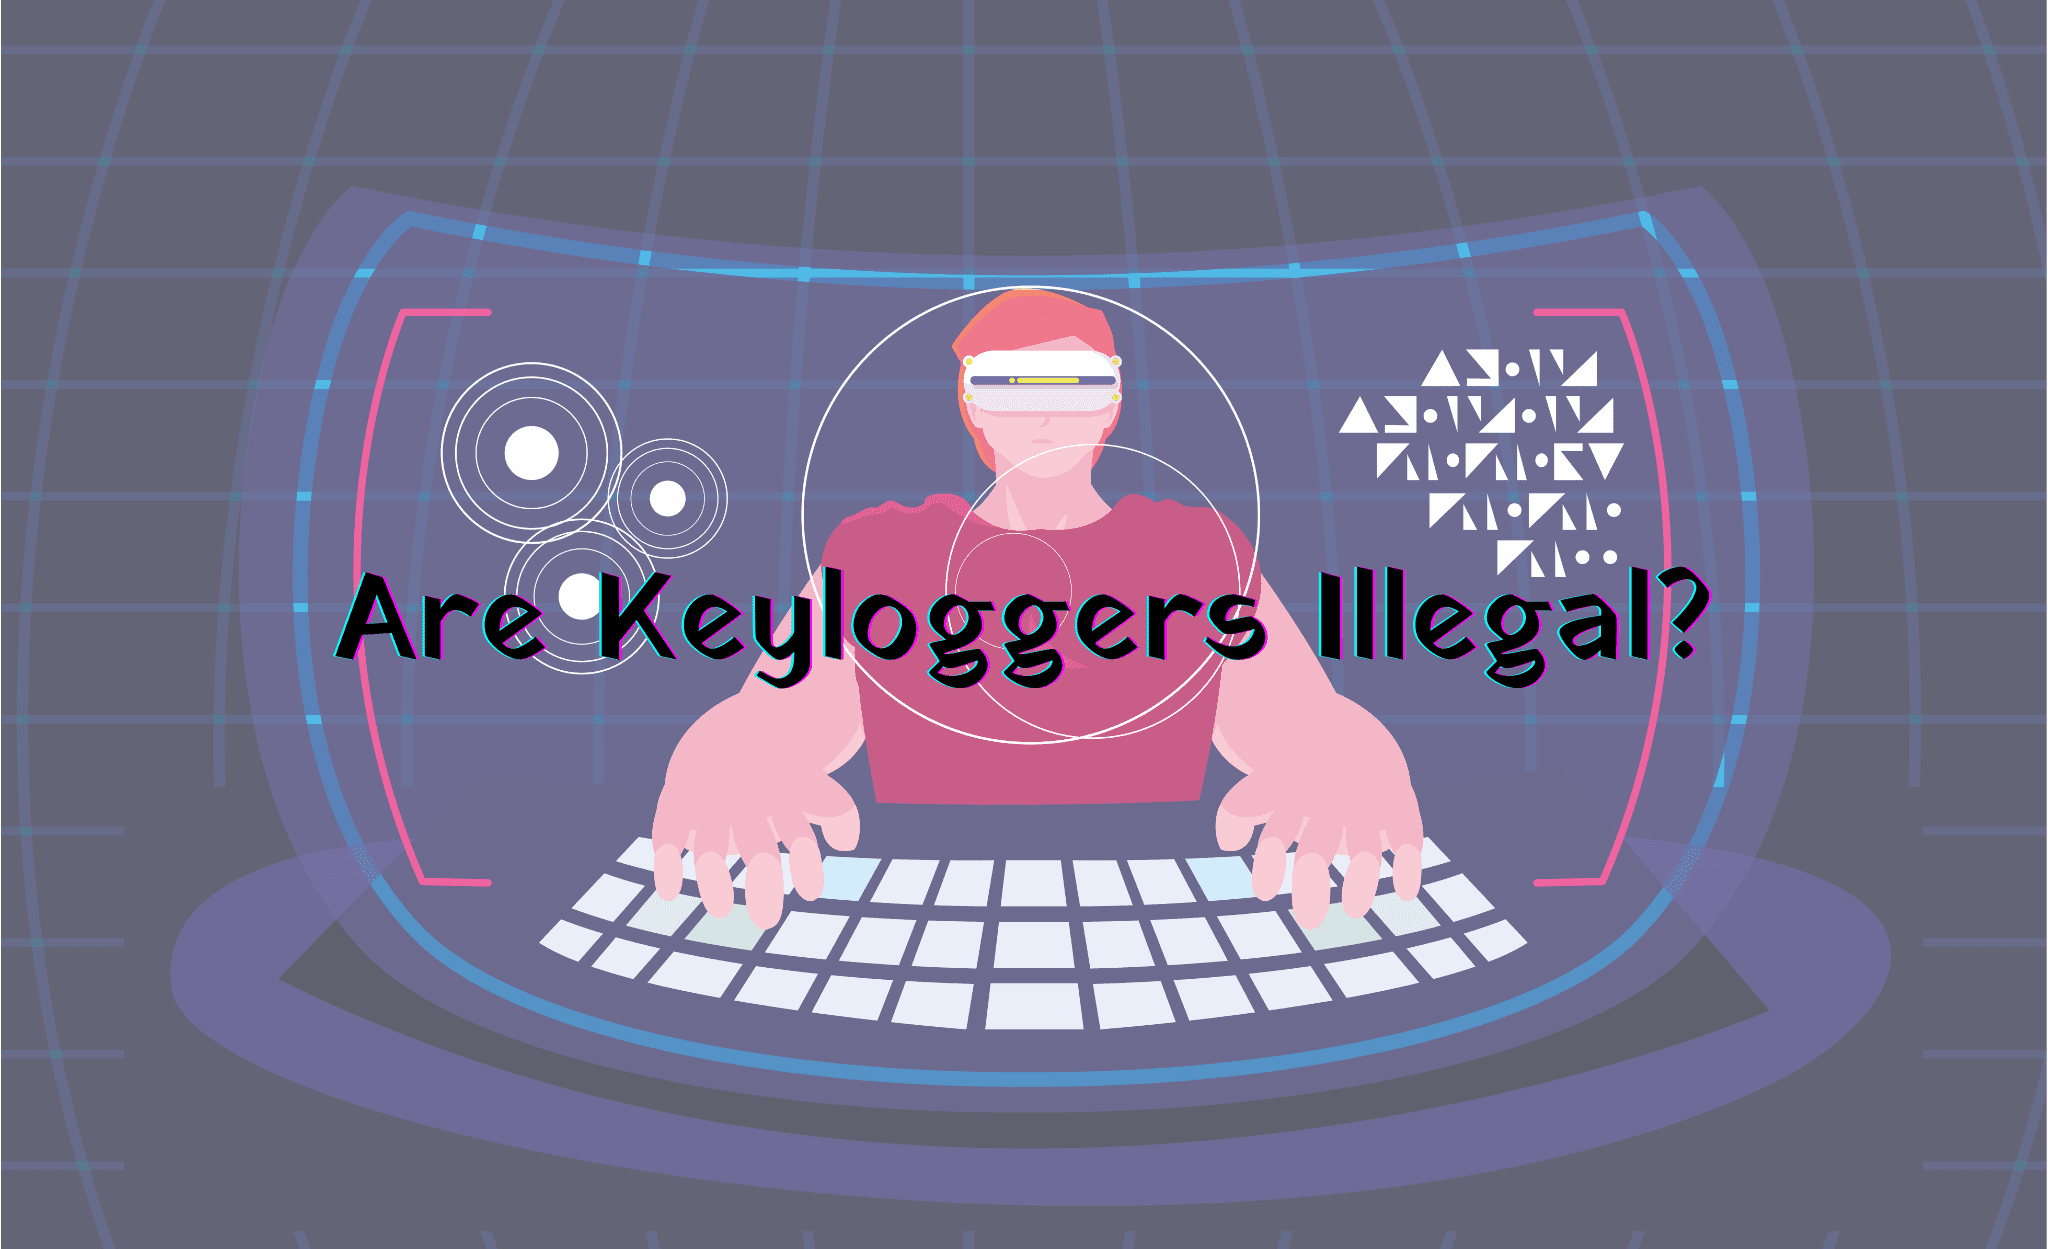 Are keylogging illegal